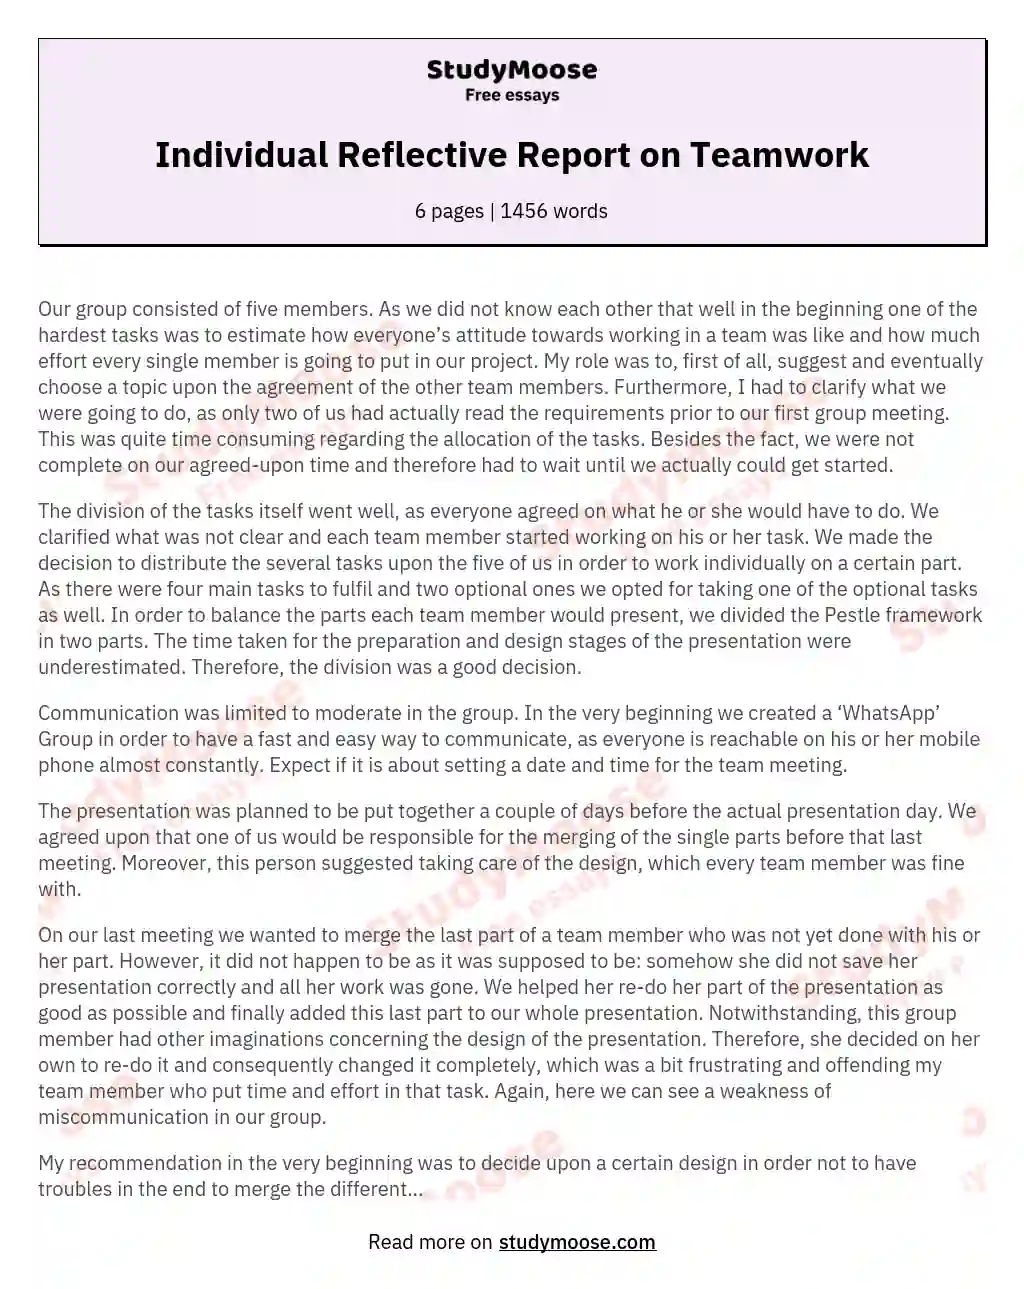 Individual Reflective Report on Teamwork